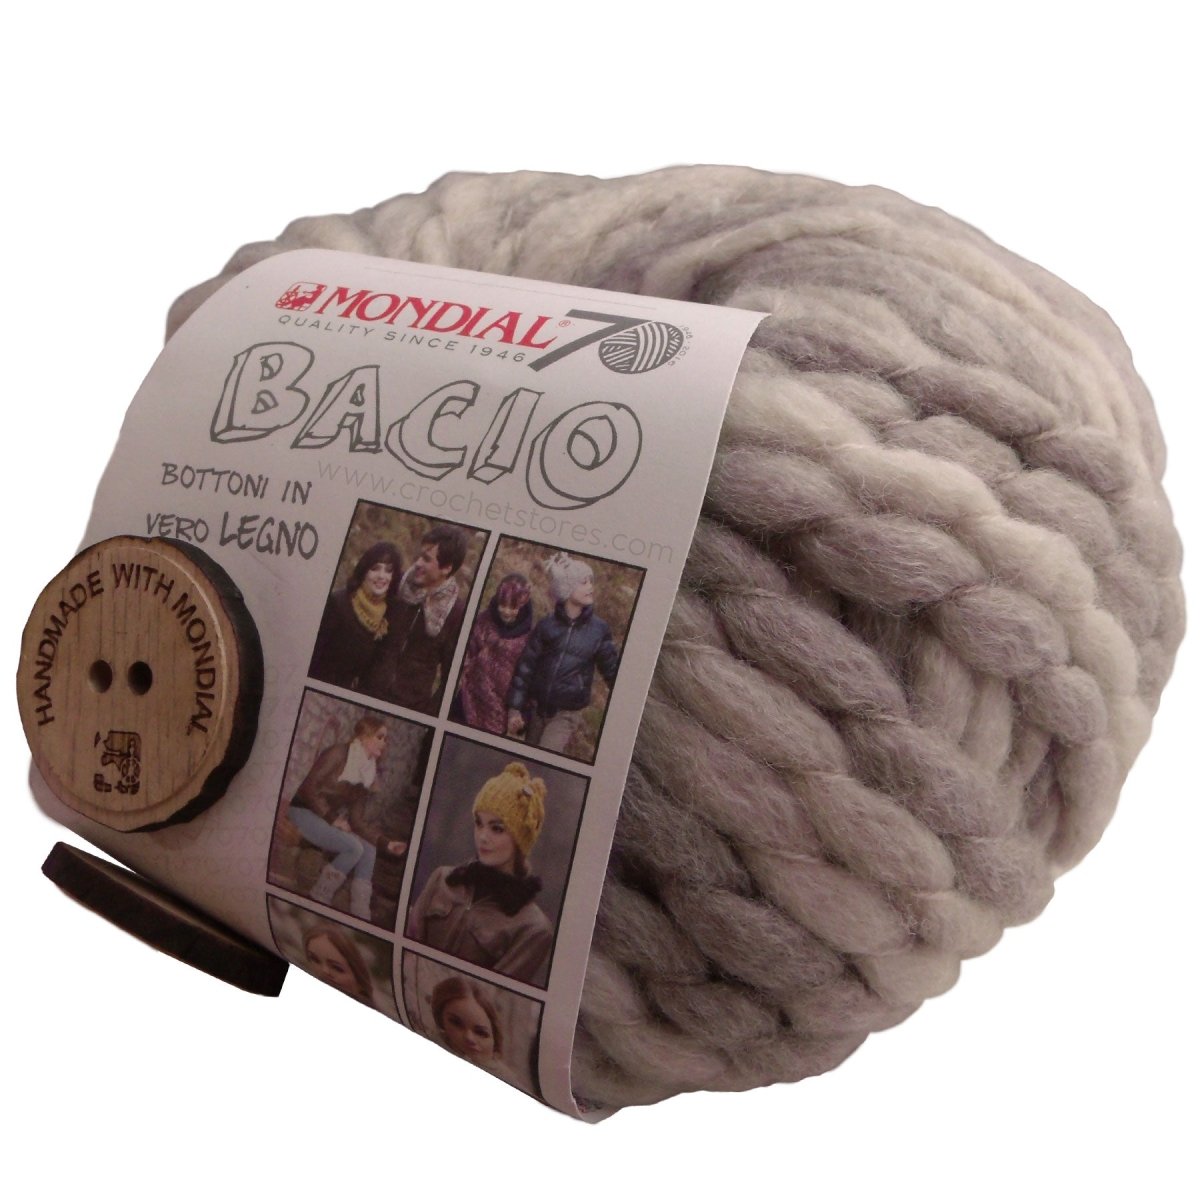 BACIO - Crochetstores12018218020586411511